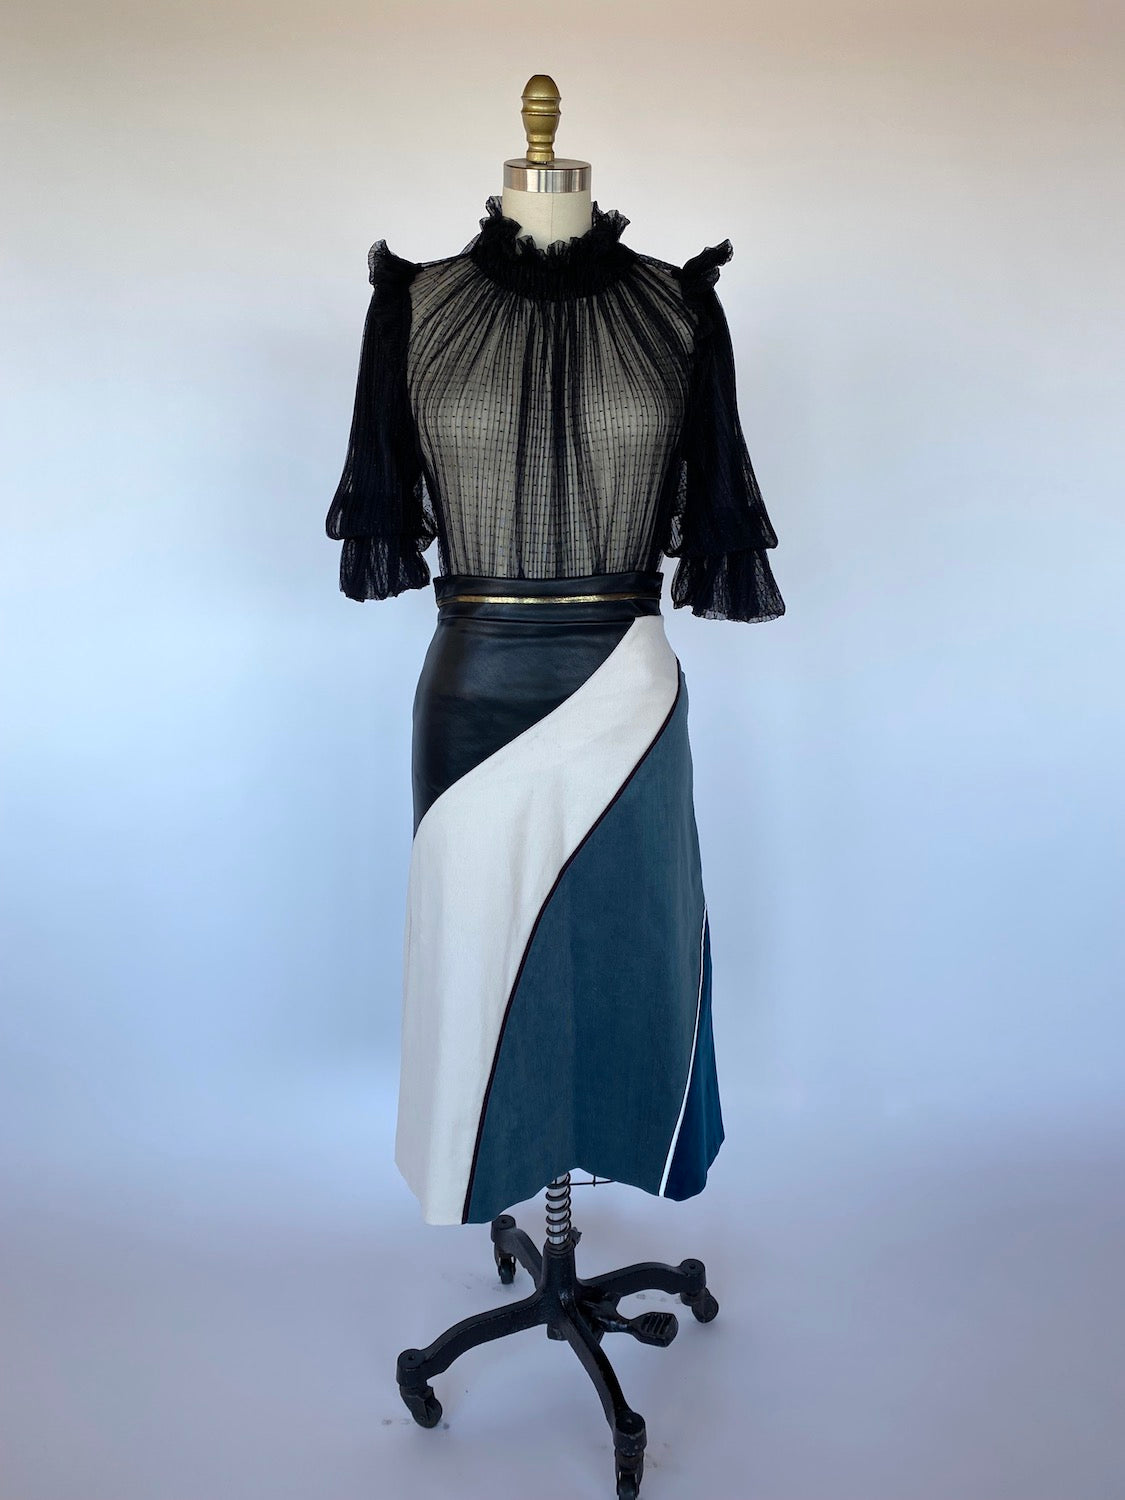 HARPER A-line Multi-color Skirt